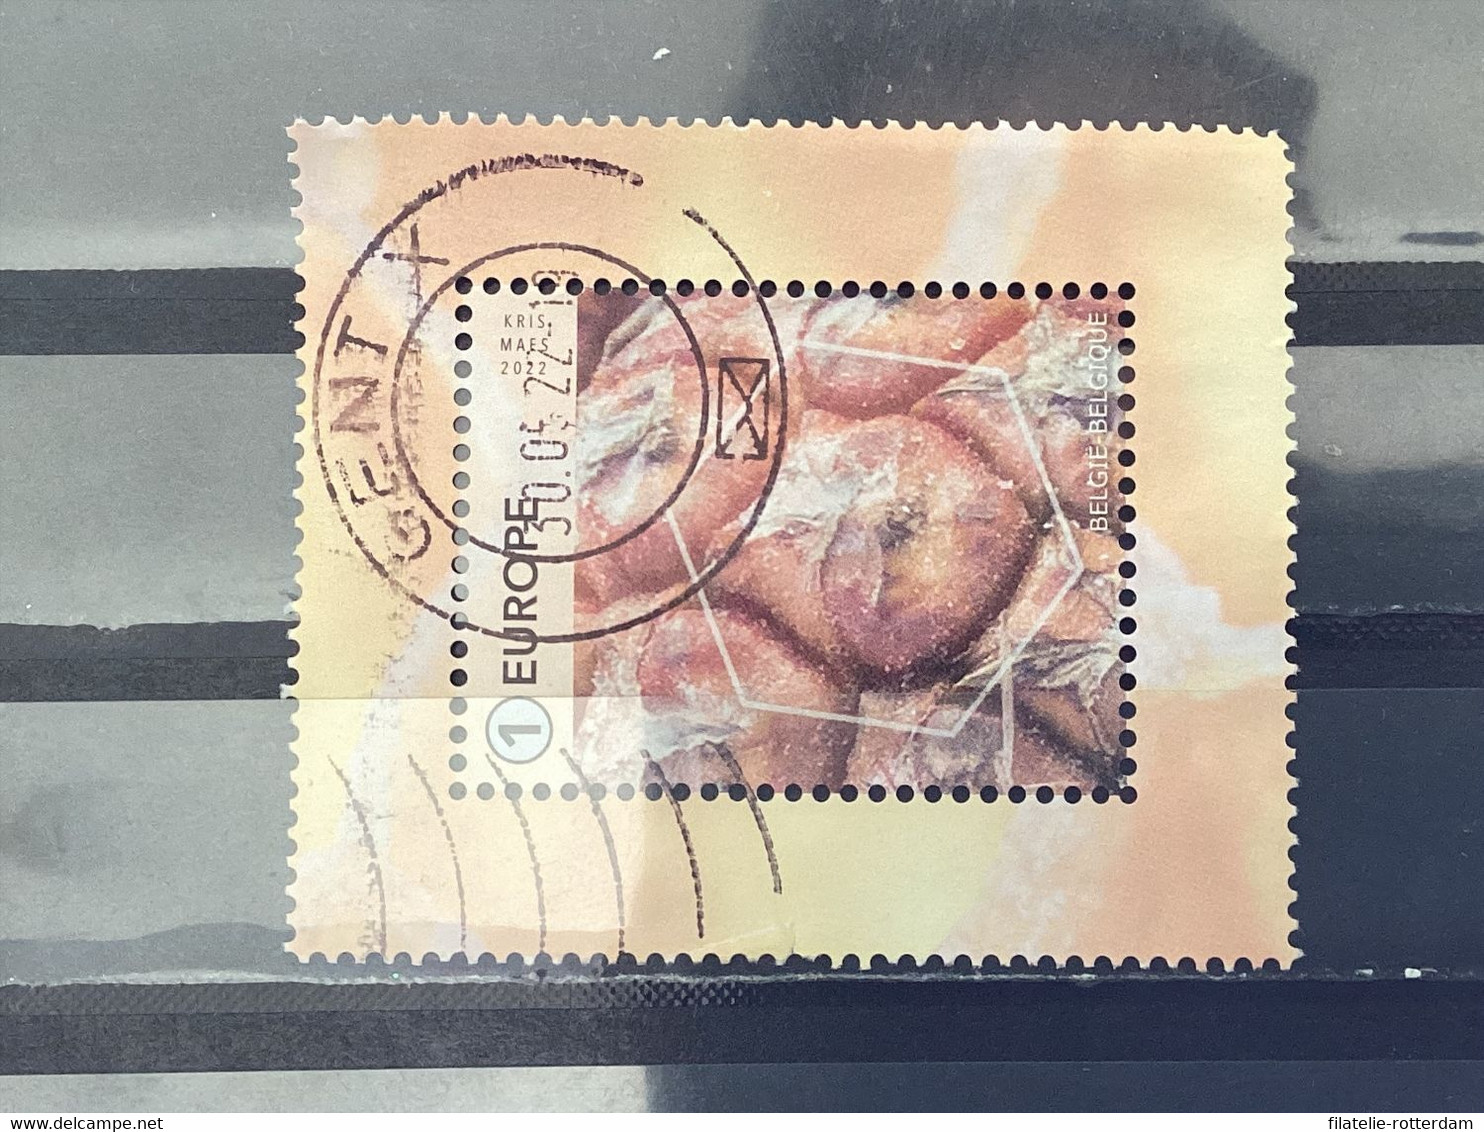 België / Belgium - Geometrie In De Natuur 2022 - Used Stamps